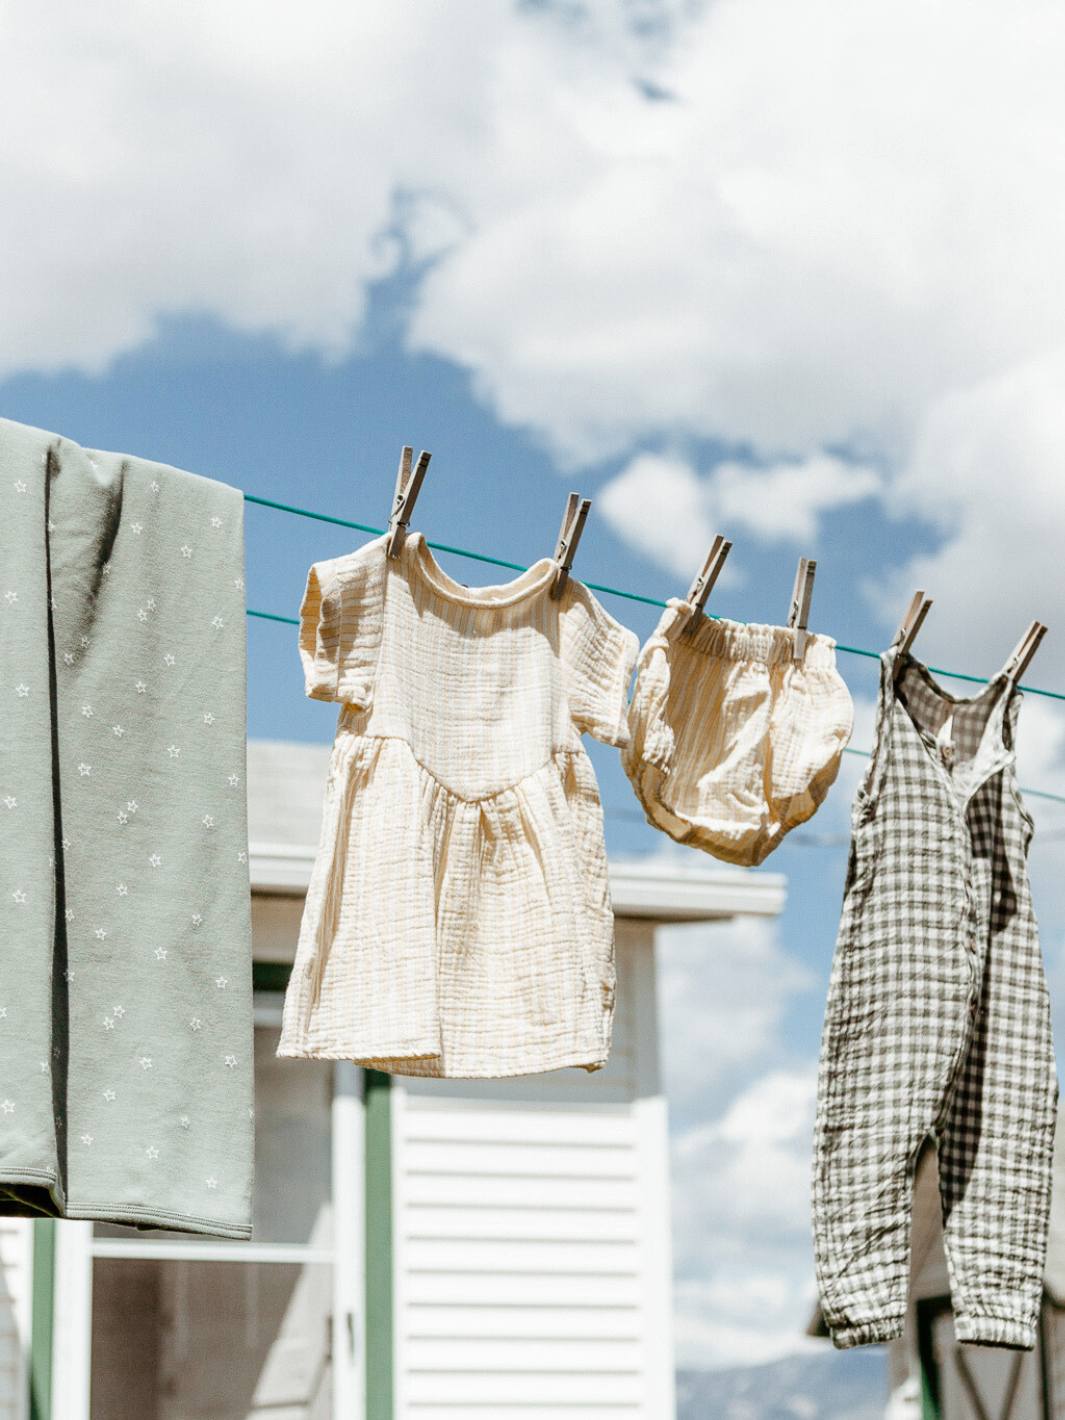 Littles clothing hanging on clothesline. Heyday Bozeman